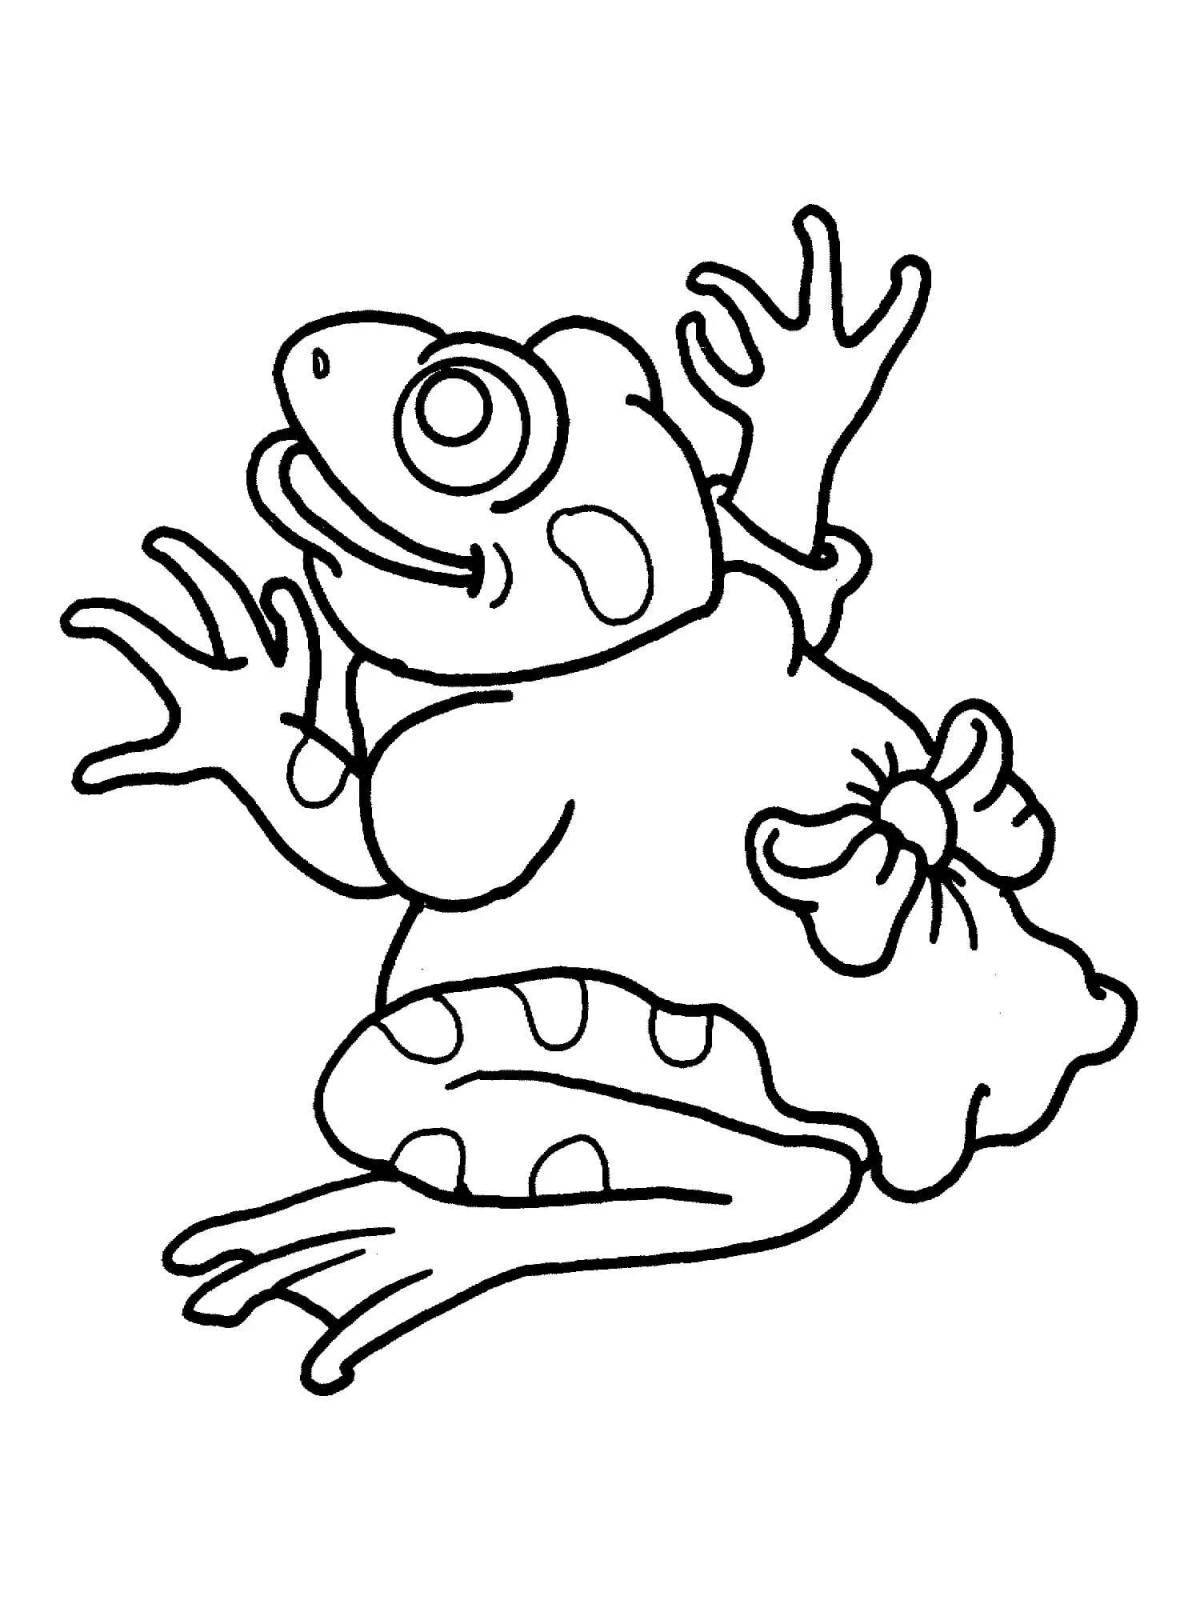 Living frog-teremok coloring book